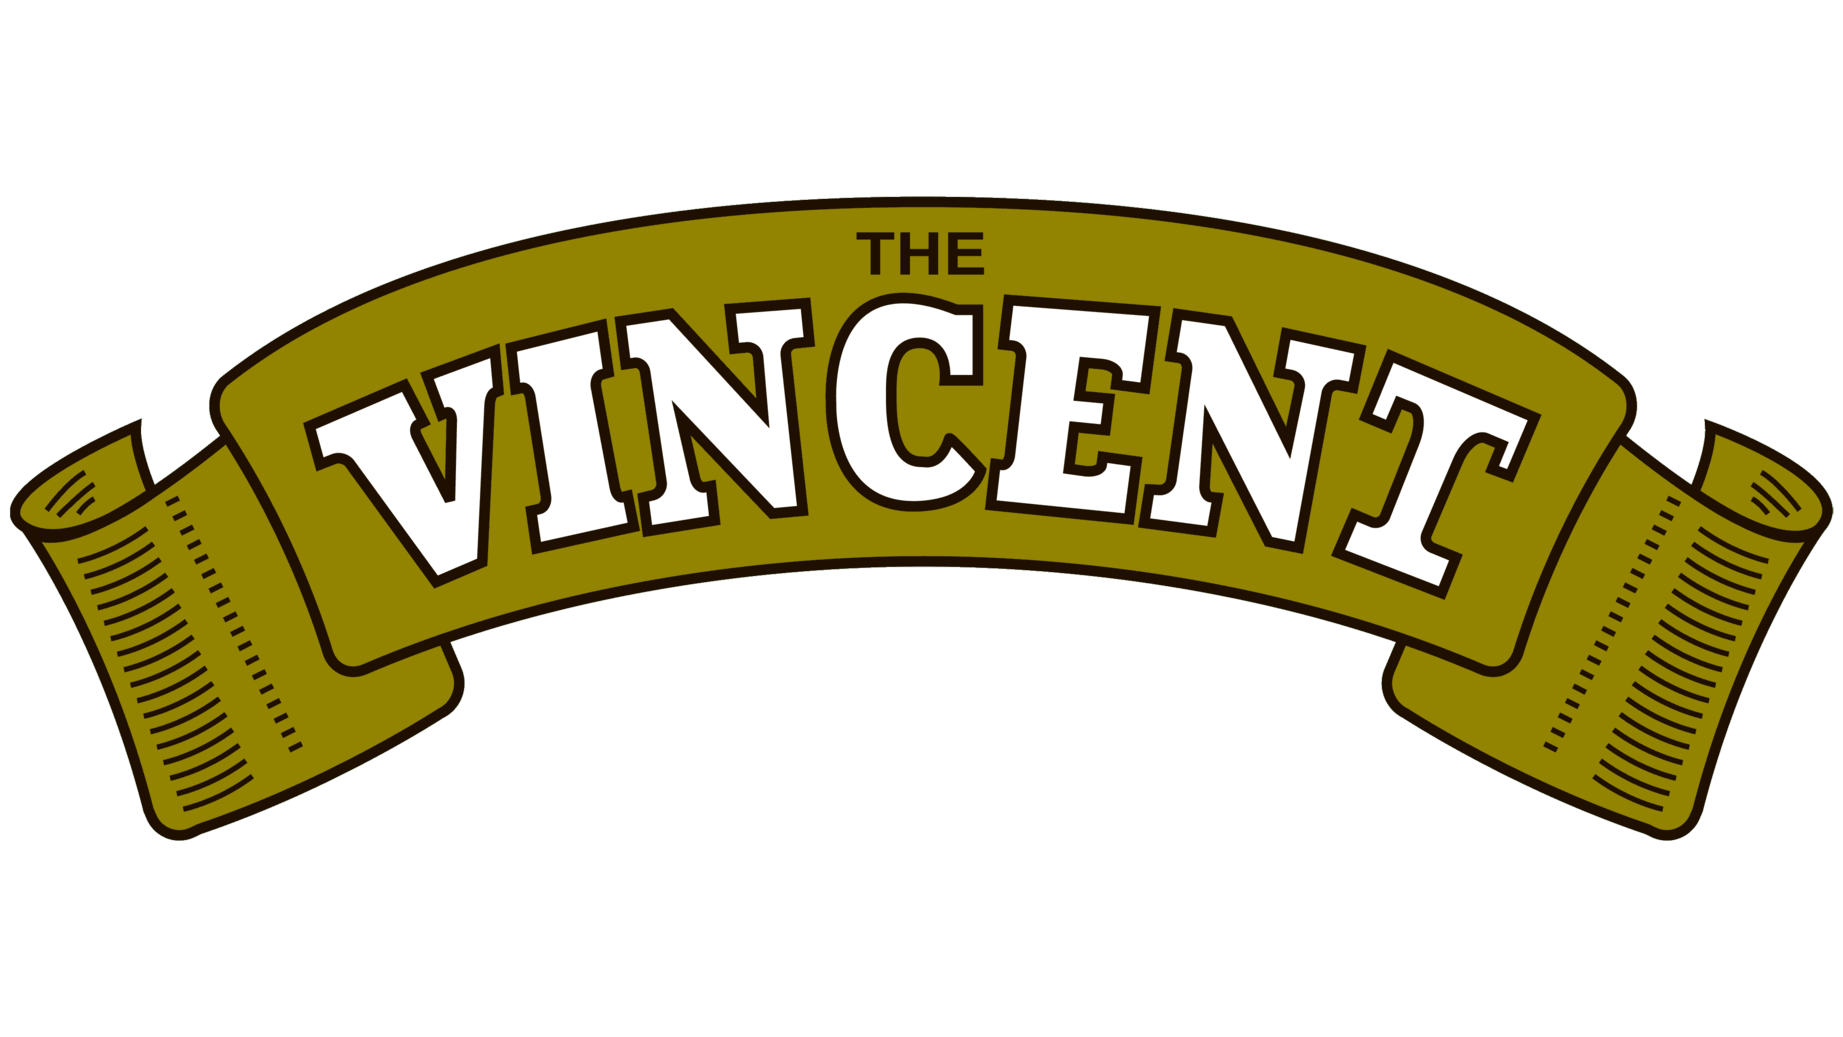 Vincent sign